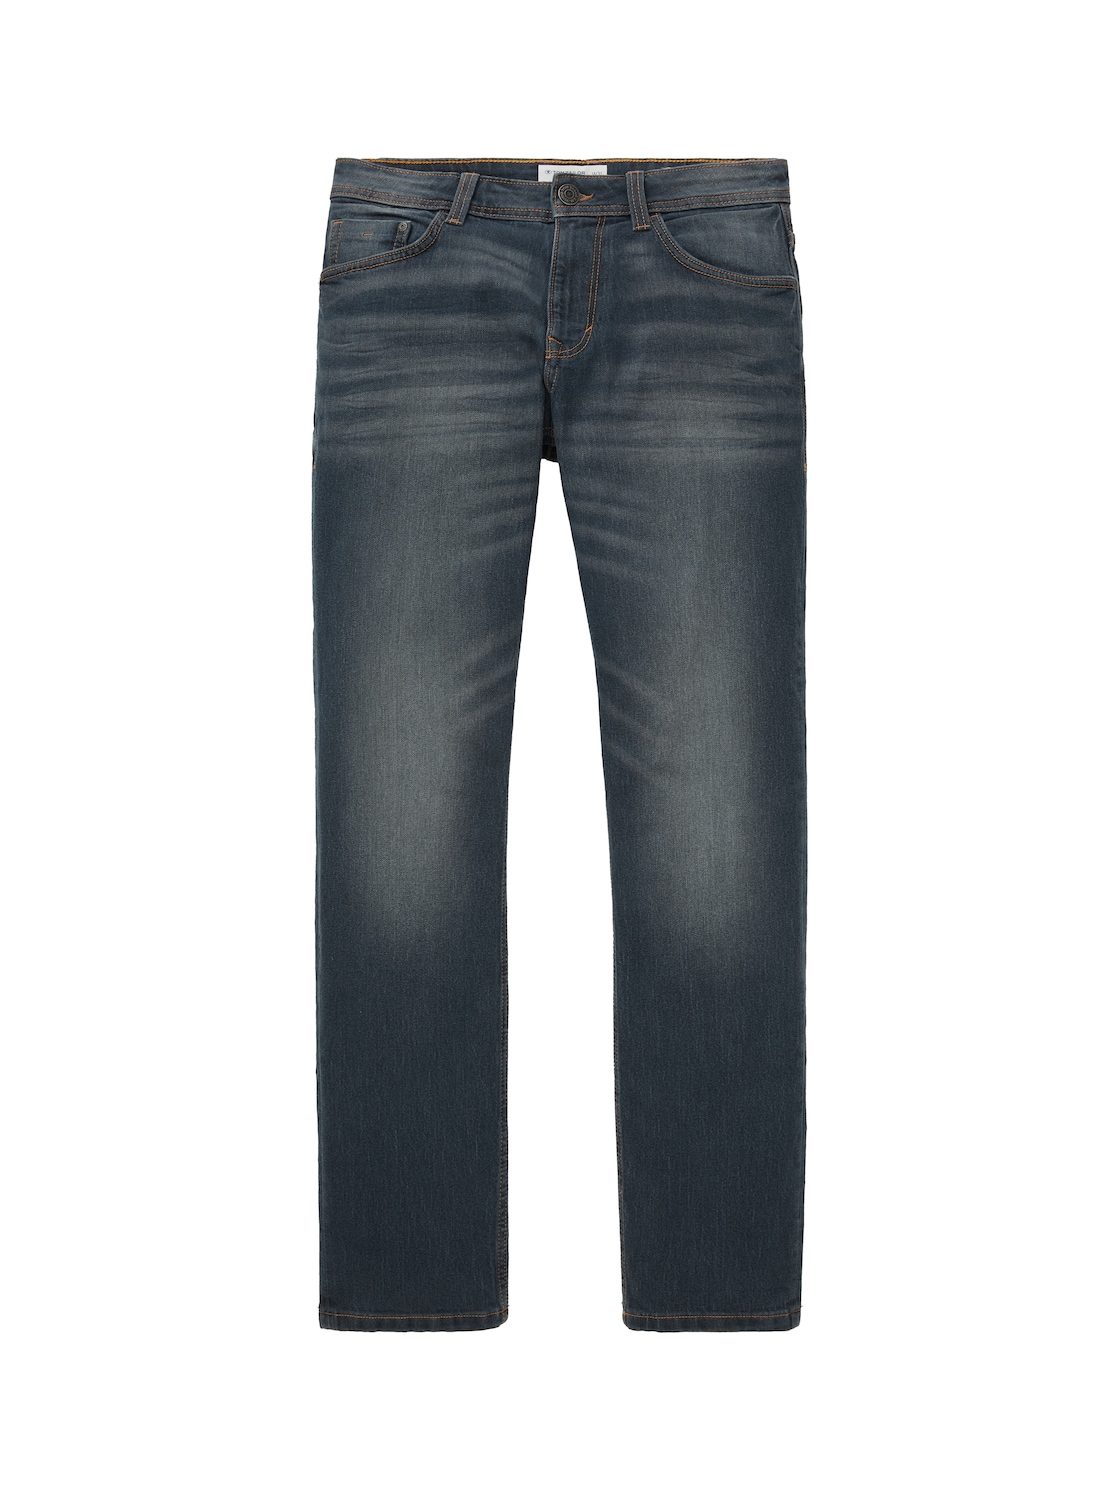 TOM TAILOR Herren Marvin Straight Jeans, blau, Uni, Gr. 40/34 von Tom Tailor